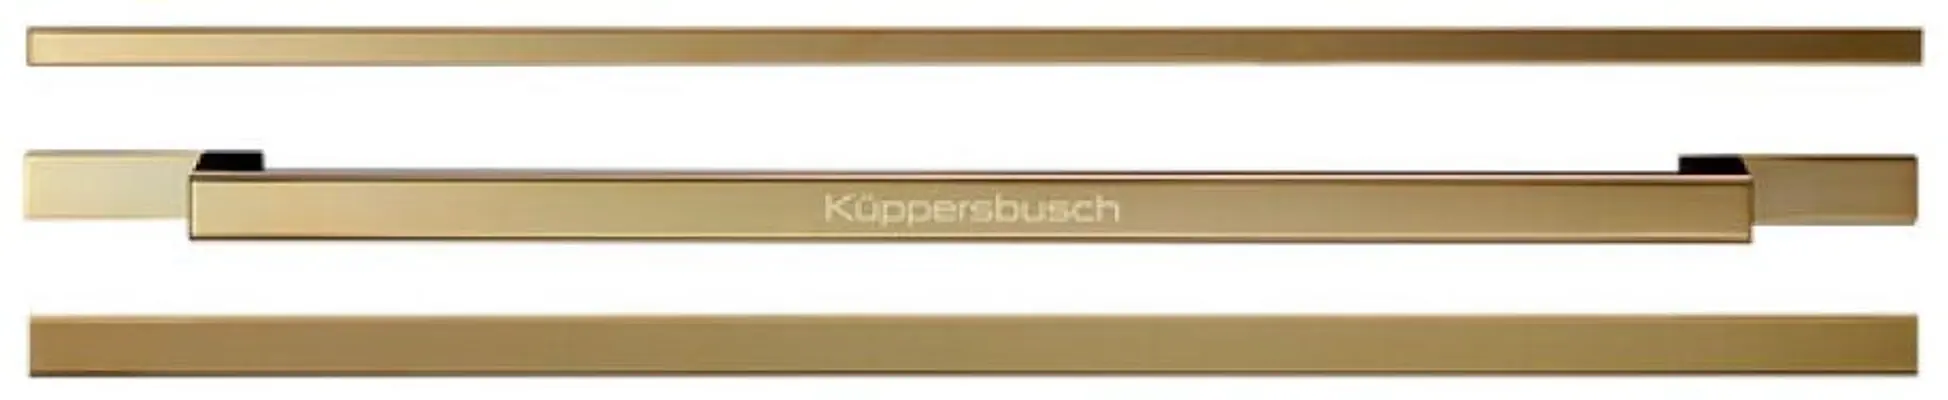 DK4003-Kuppersbusch-Koel-vries-accessoires